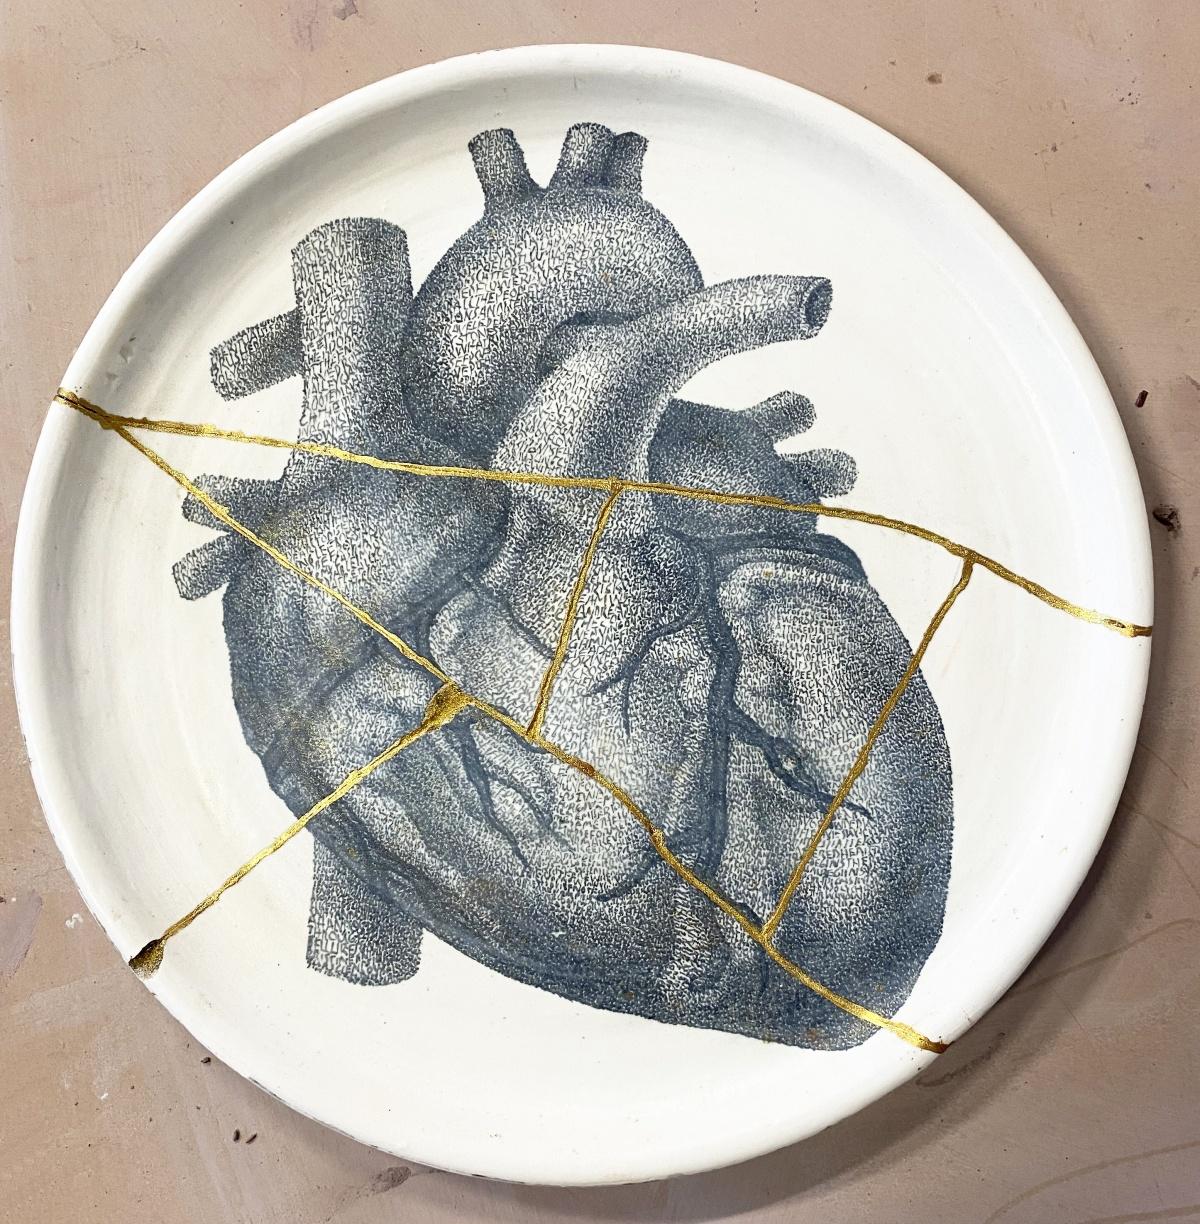 Bryan Valenzuela, Kintsugi Heart (artist proof test plate), 2021. Ceramic and gold, 10 x 10 in.